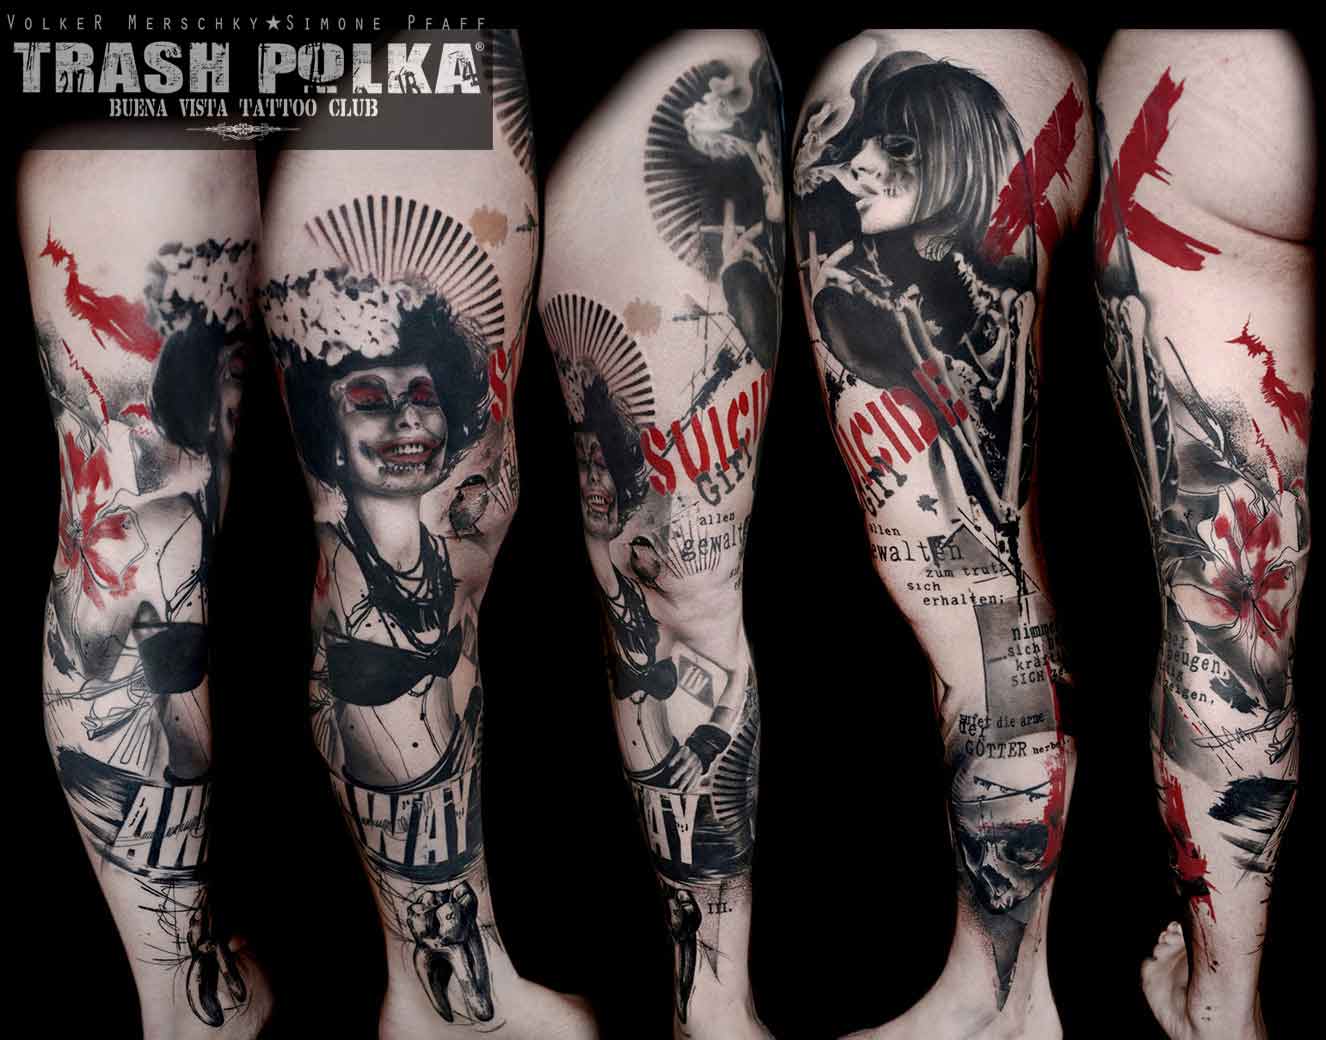 trash polka leg-leg tattoo with smoking woman in red black